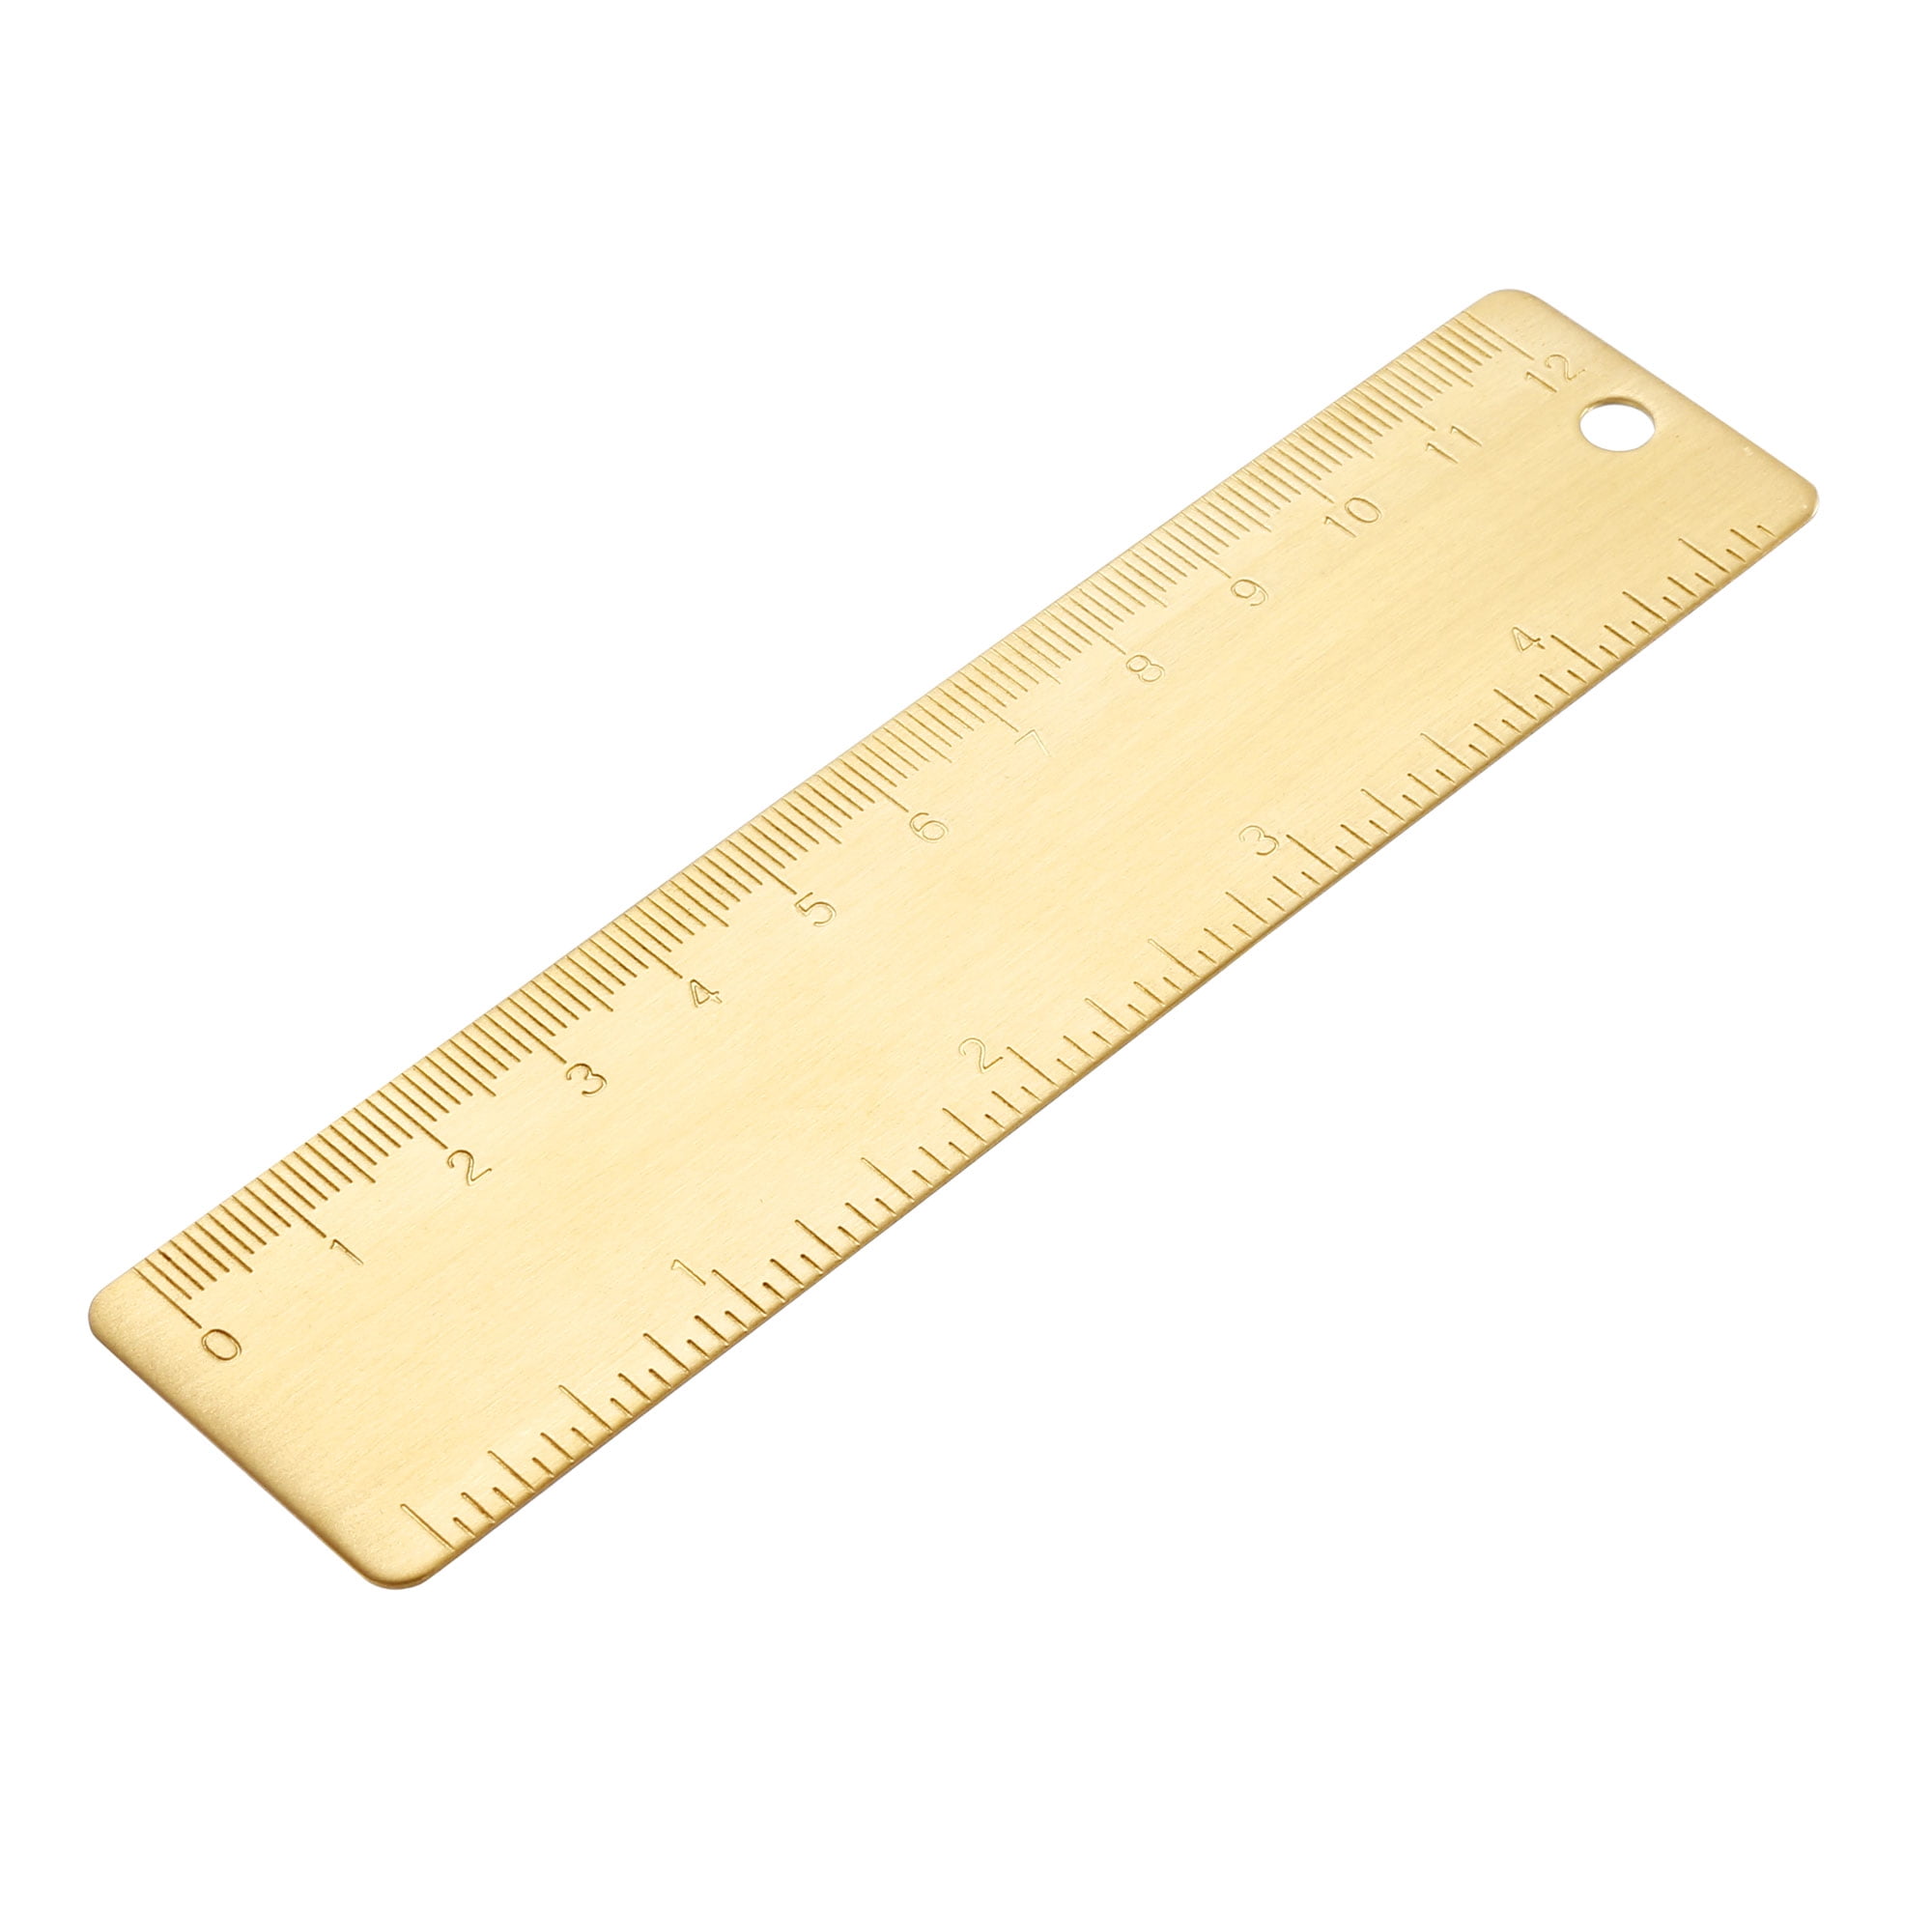 straight-ruler-120mm-4-inch-metric-brass-rulers-measurement-tools